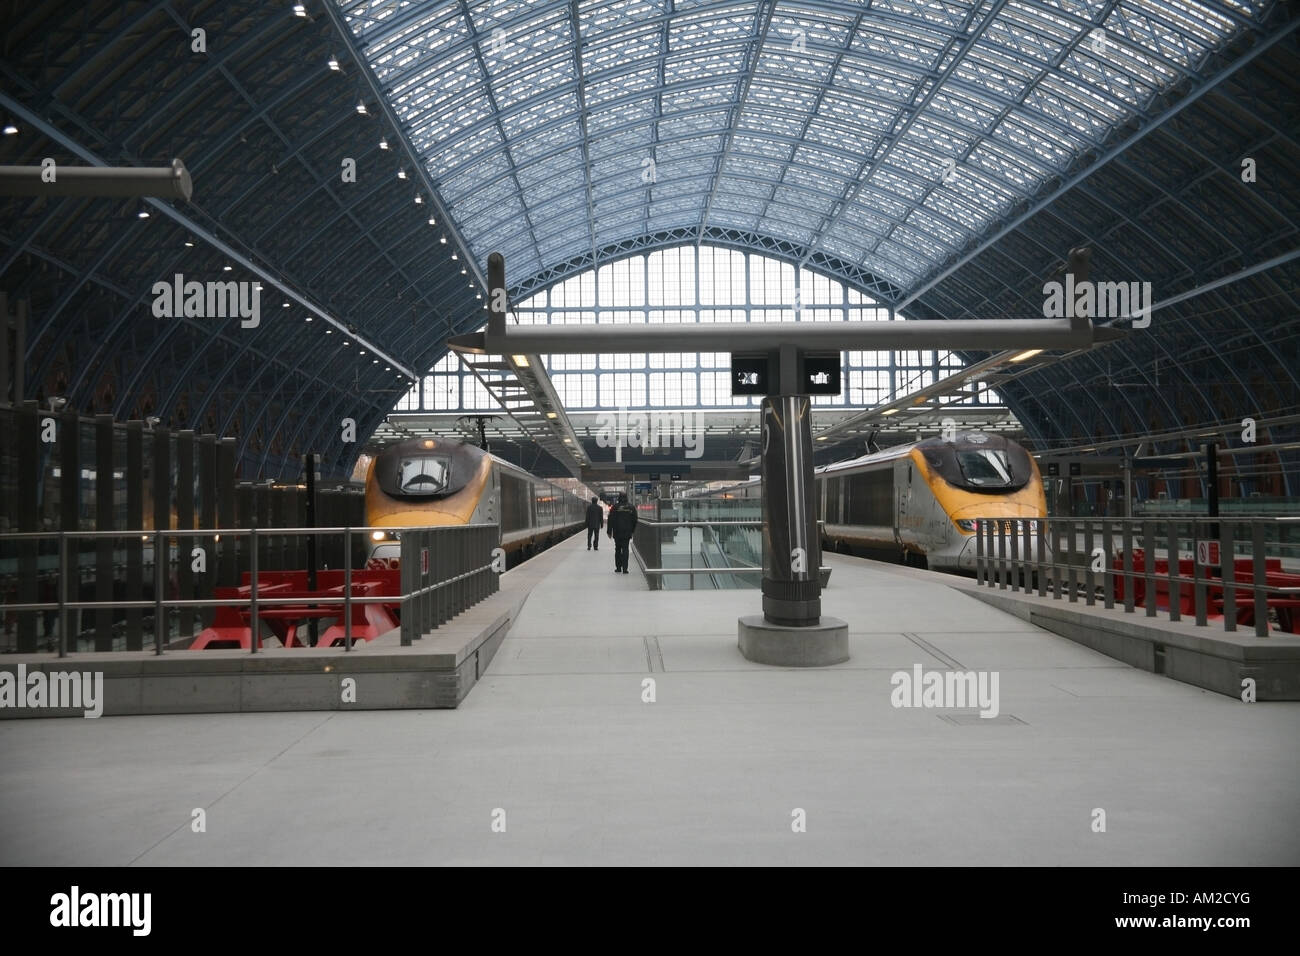 Euro Star trains at St Pancras Station London Stock Photo